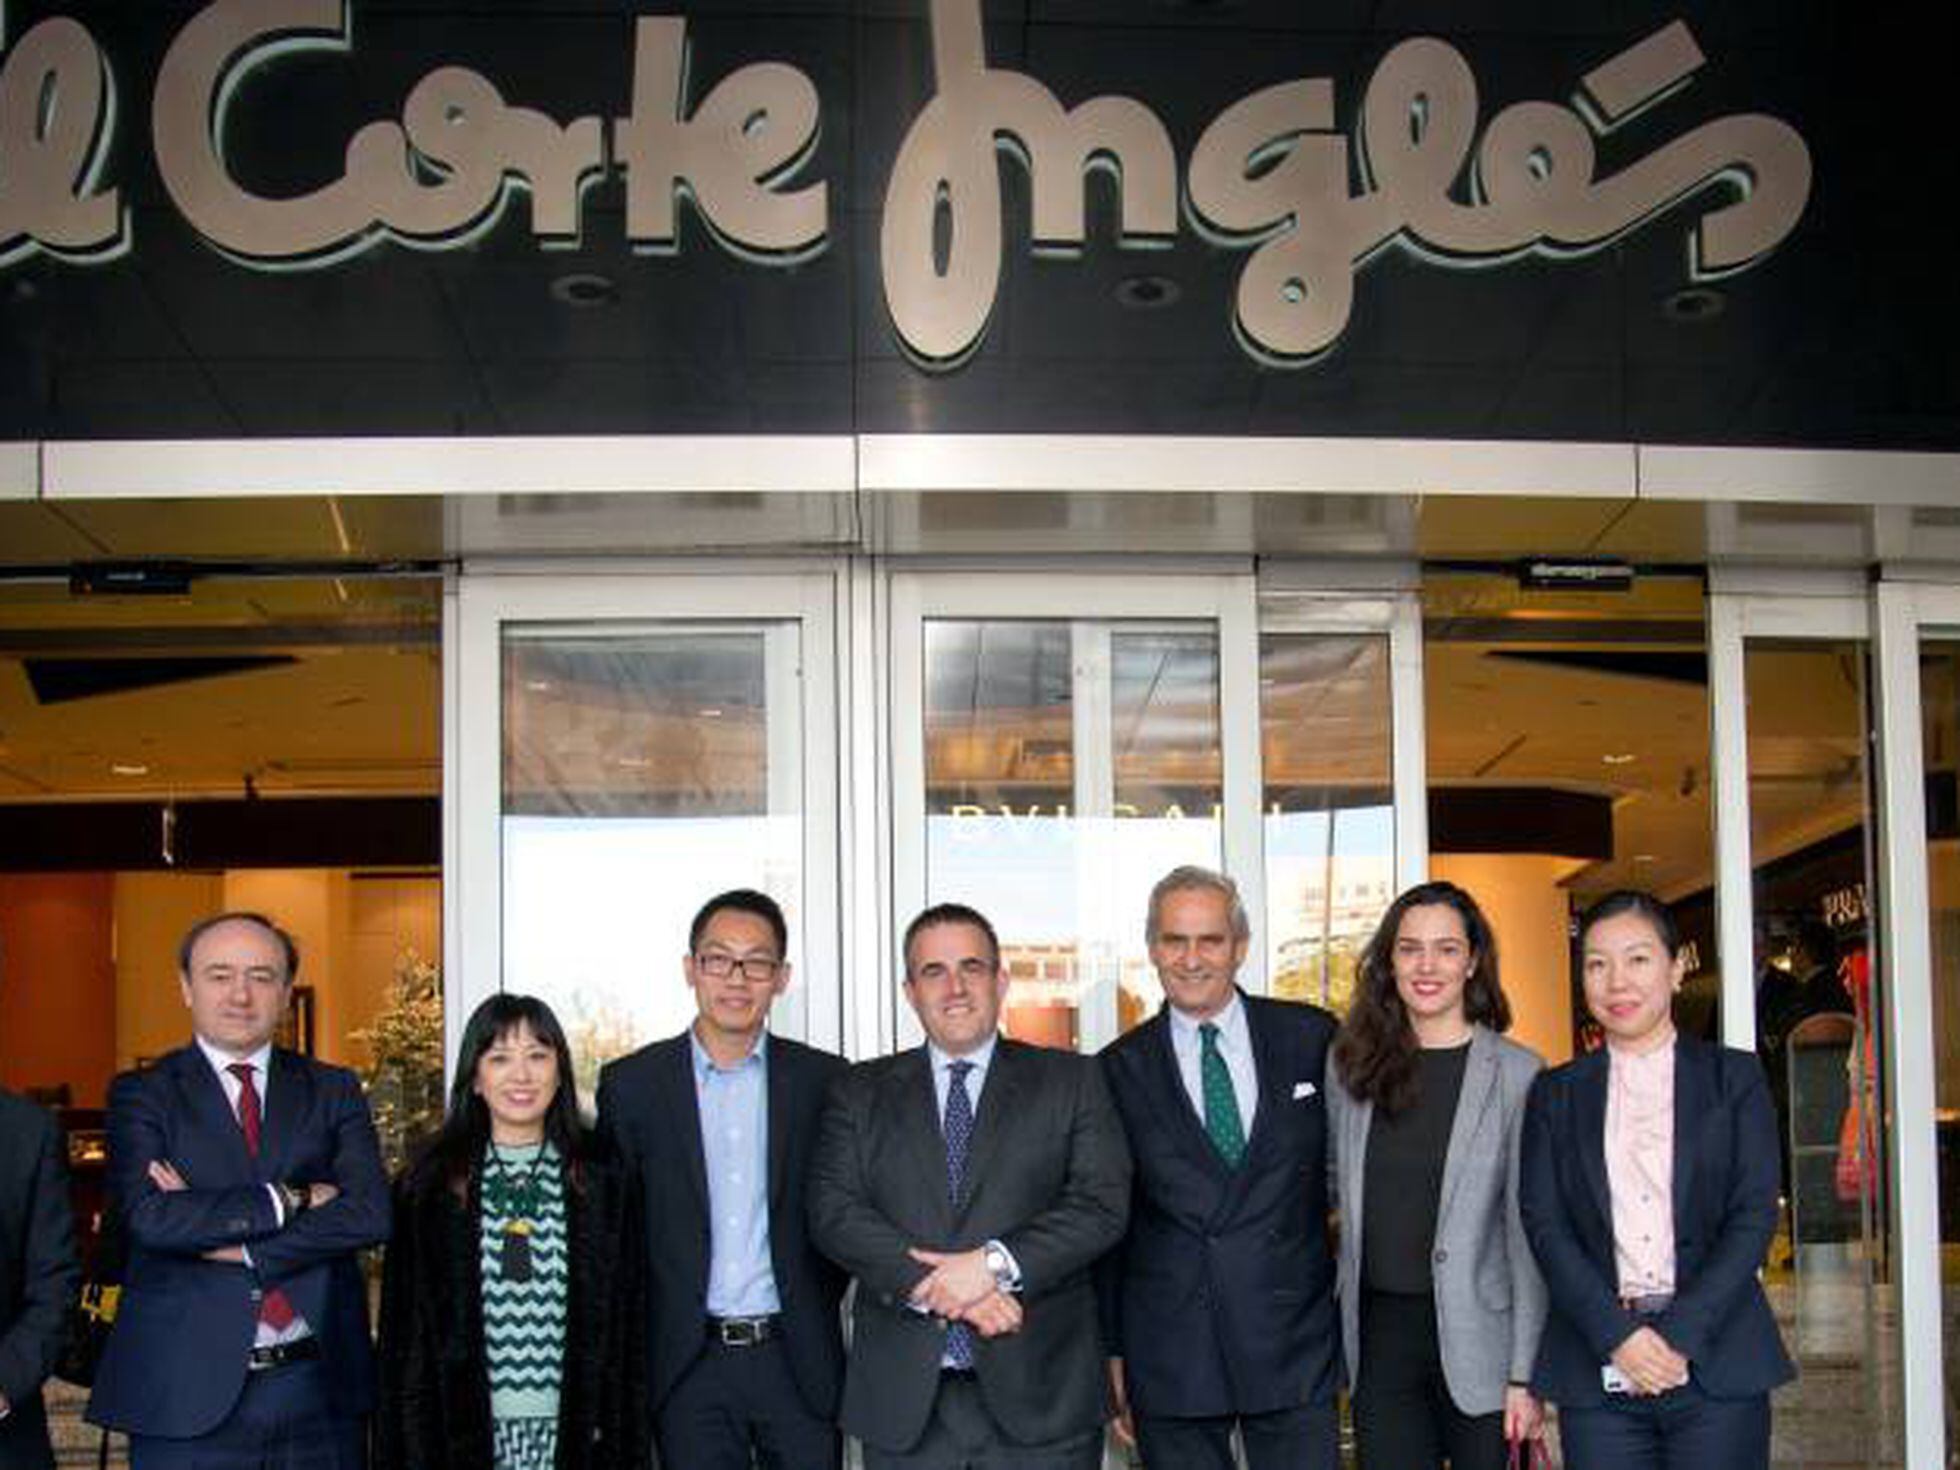 El Corte Ingles partners with Alibaba